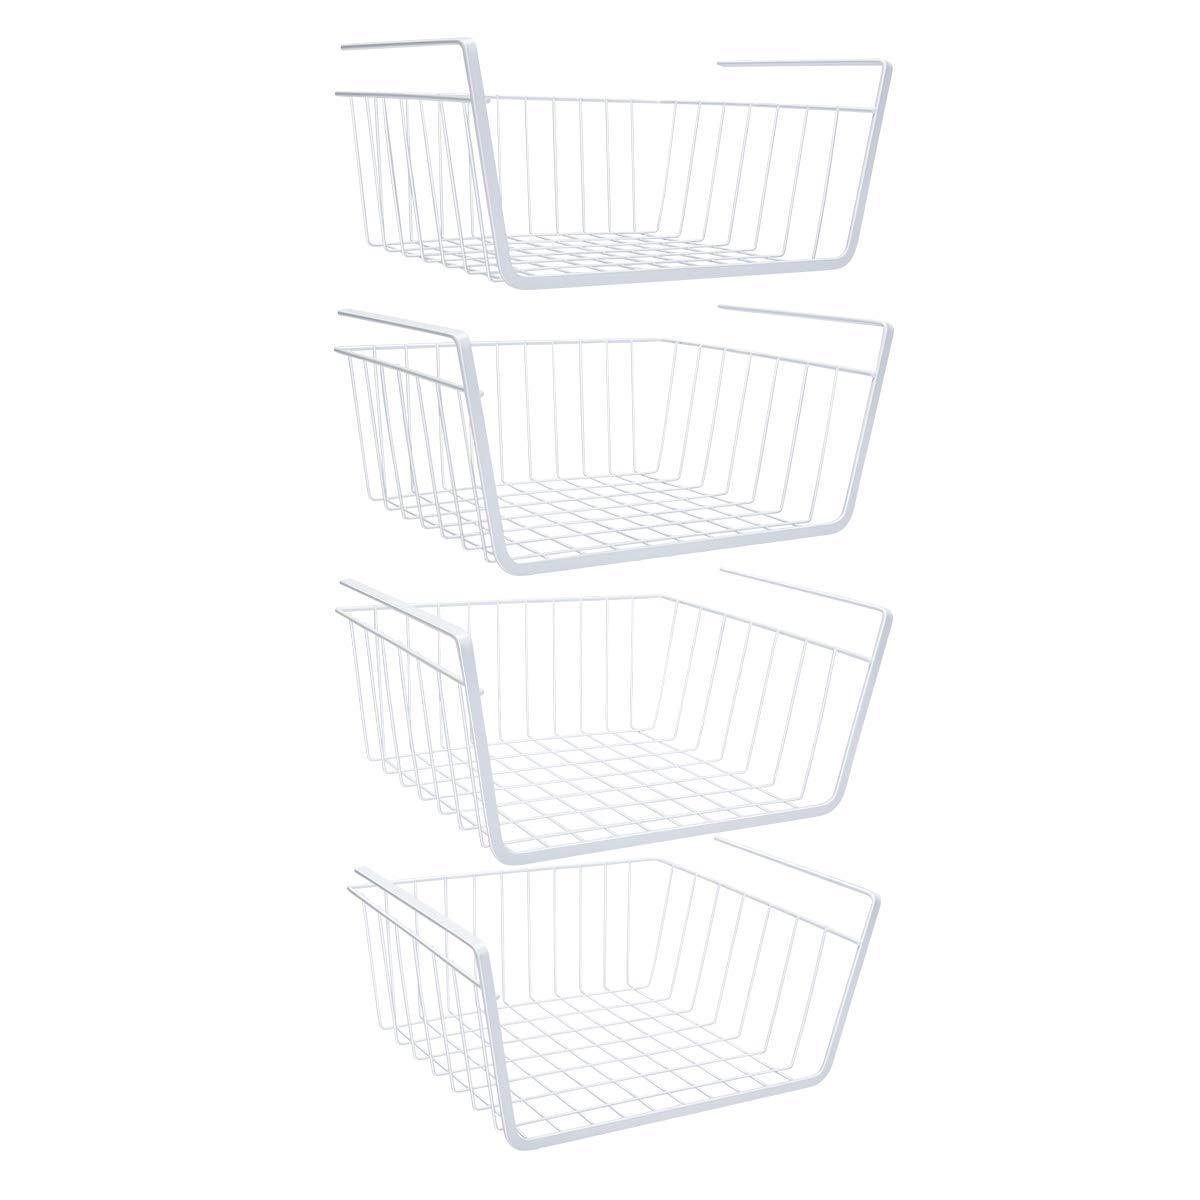 Cheap homeideas 4 pack under shelf basket white wire rack slides under shelves storage basket for kitchen pantry cabinet